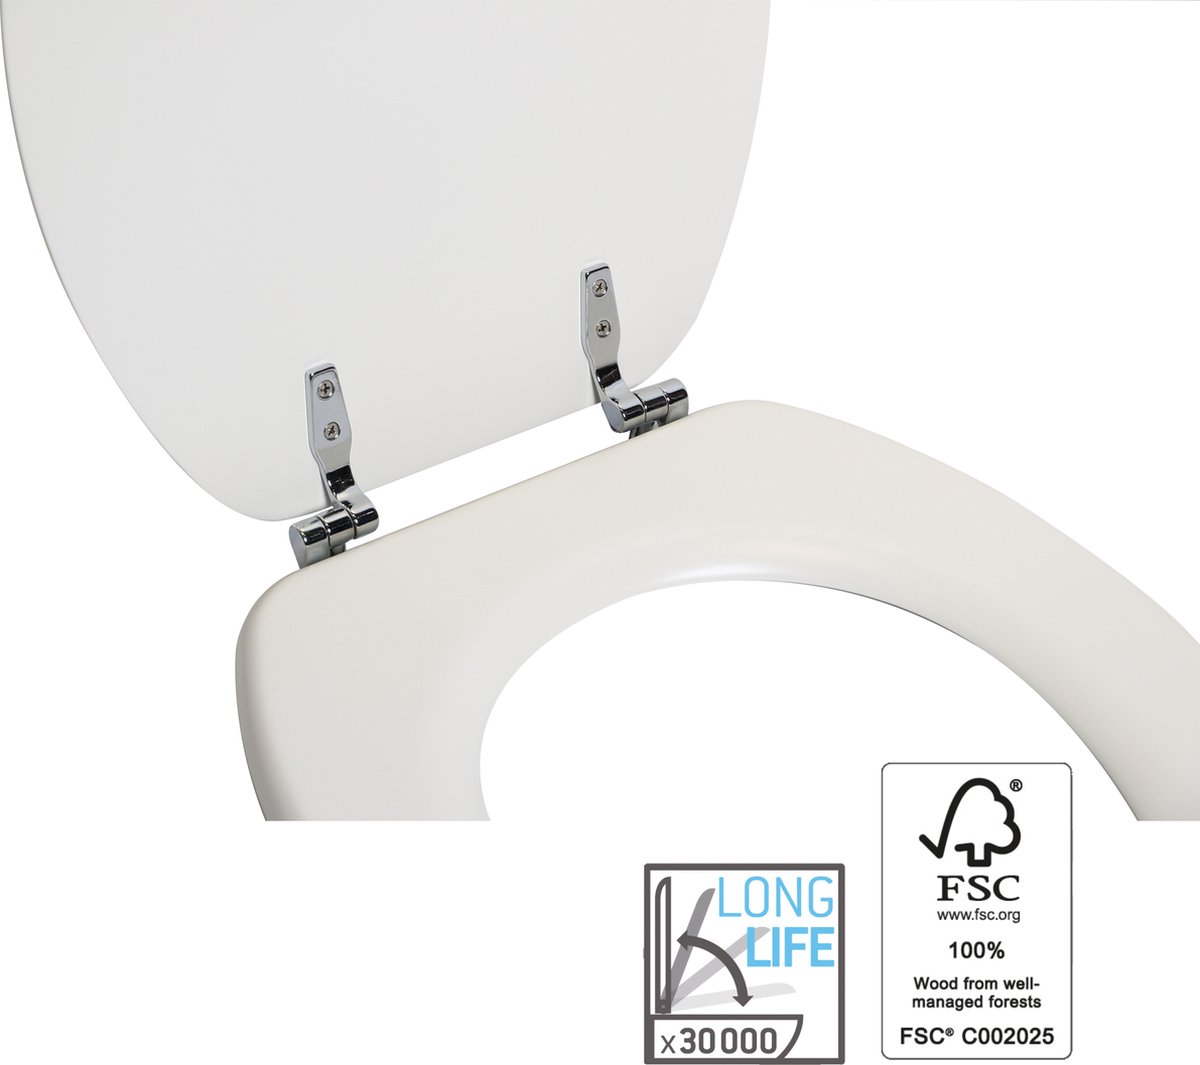 SENSEA - Abattant WC ovale - MDF - Finition blanc mat - POP